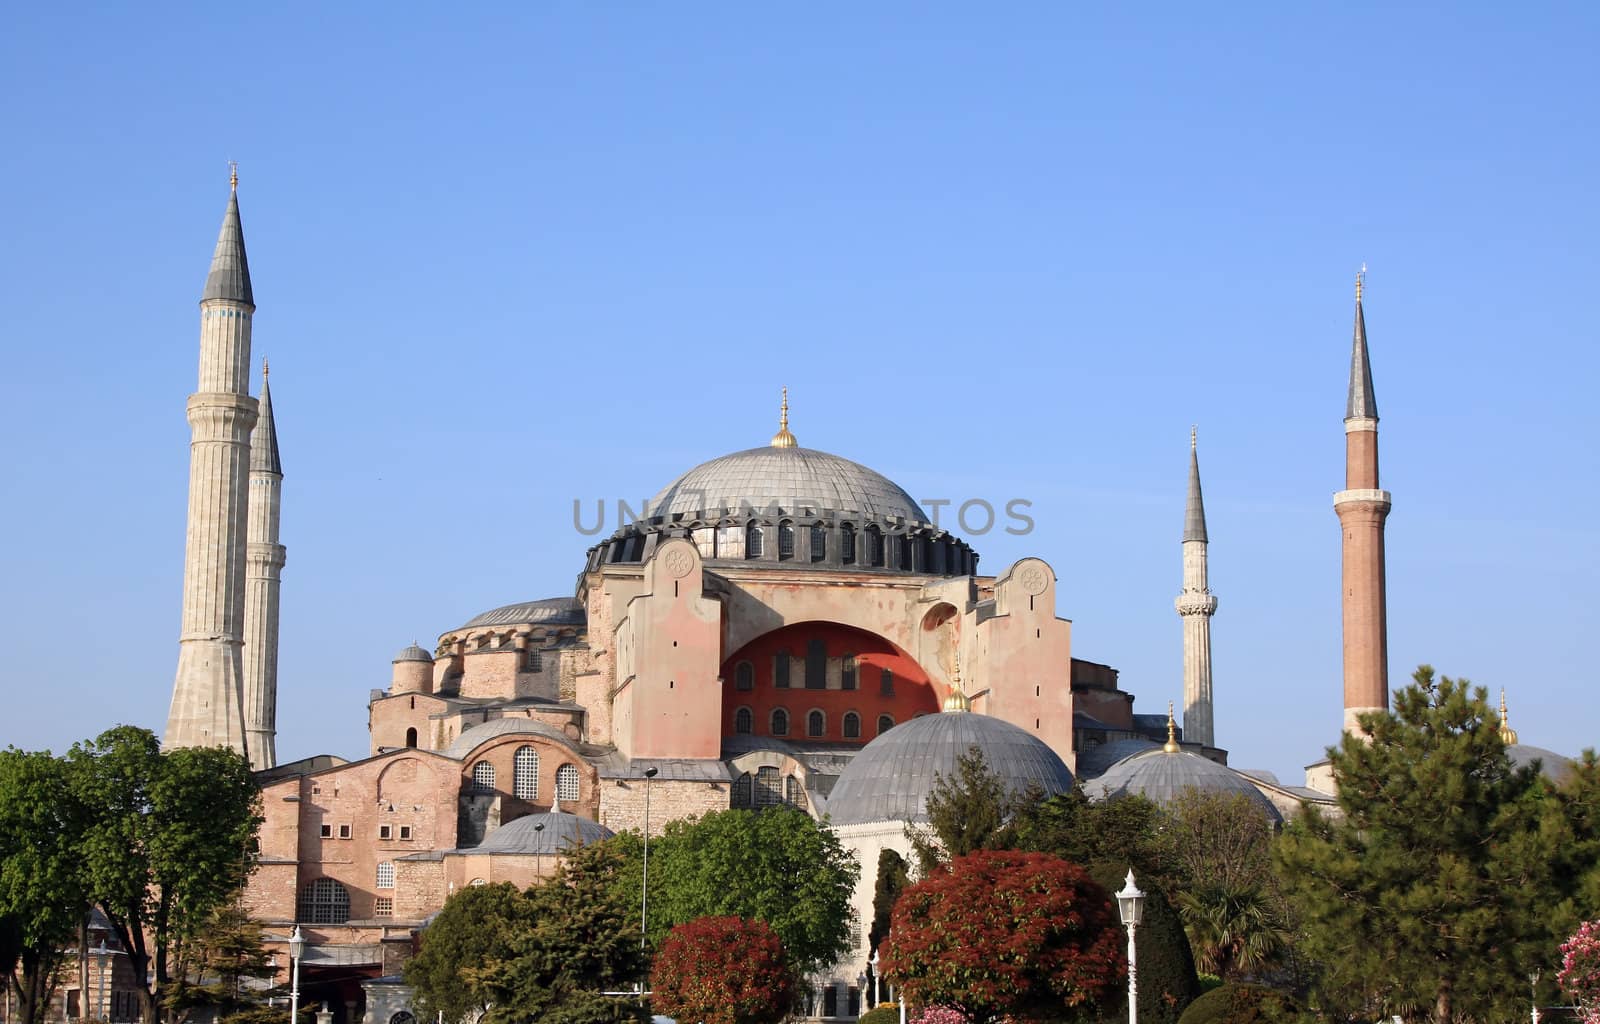 Famous Hagia Sophia church in Istanbul by swisshippo